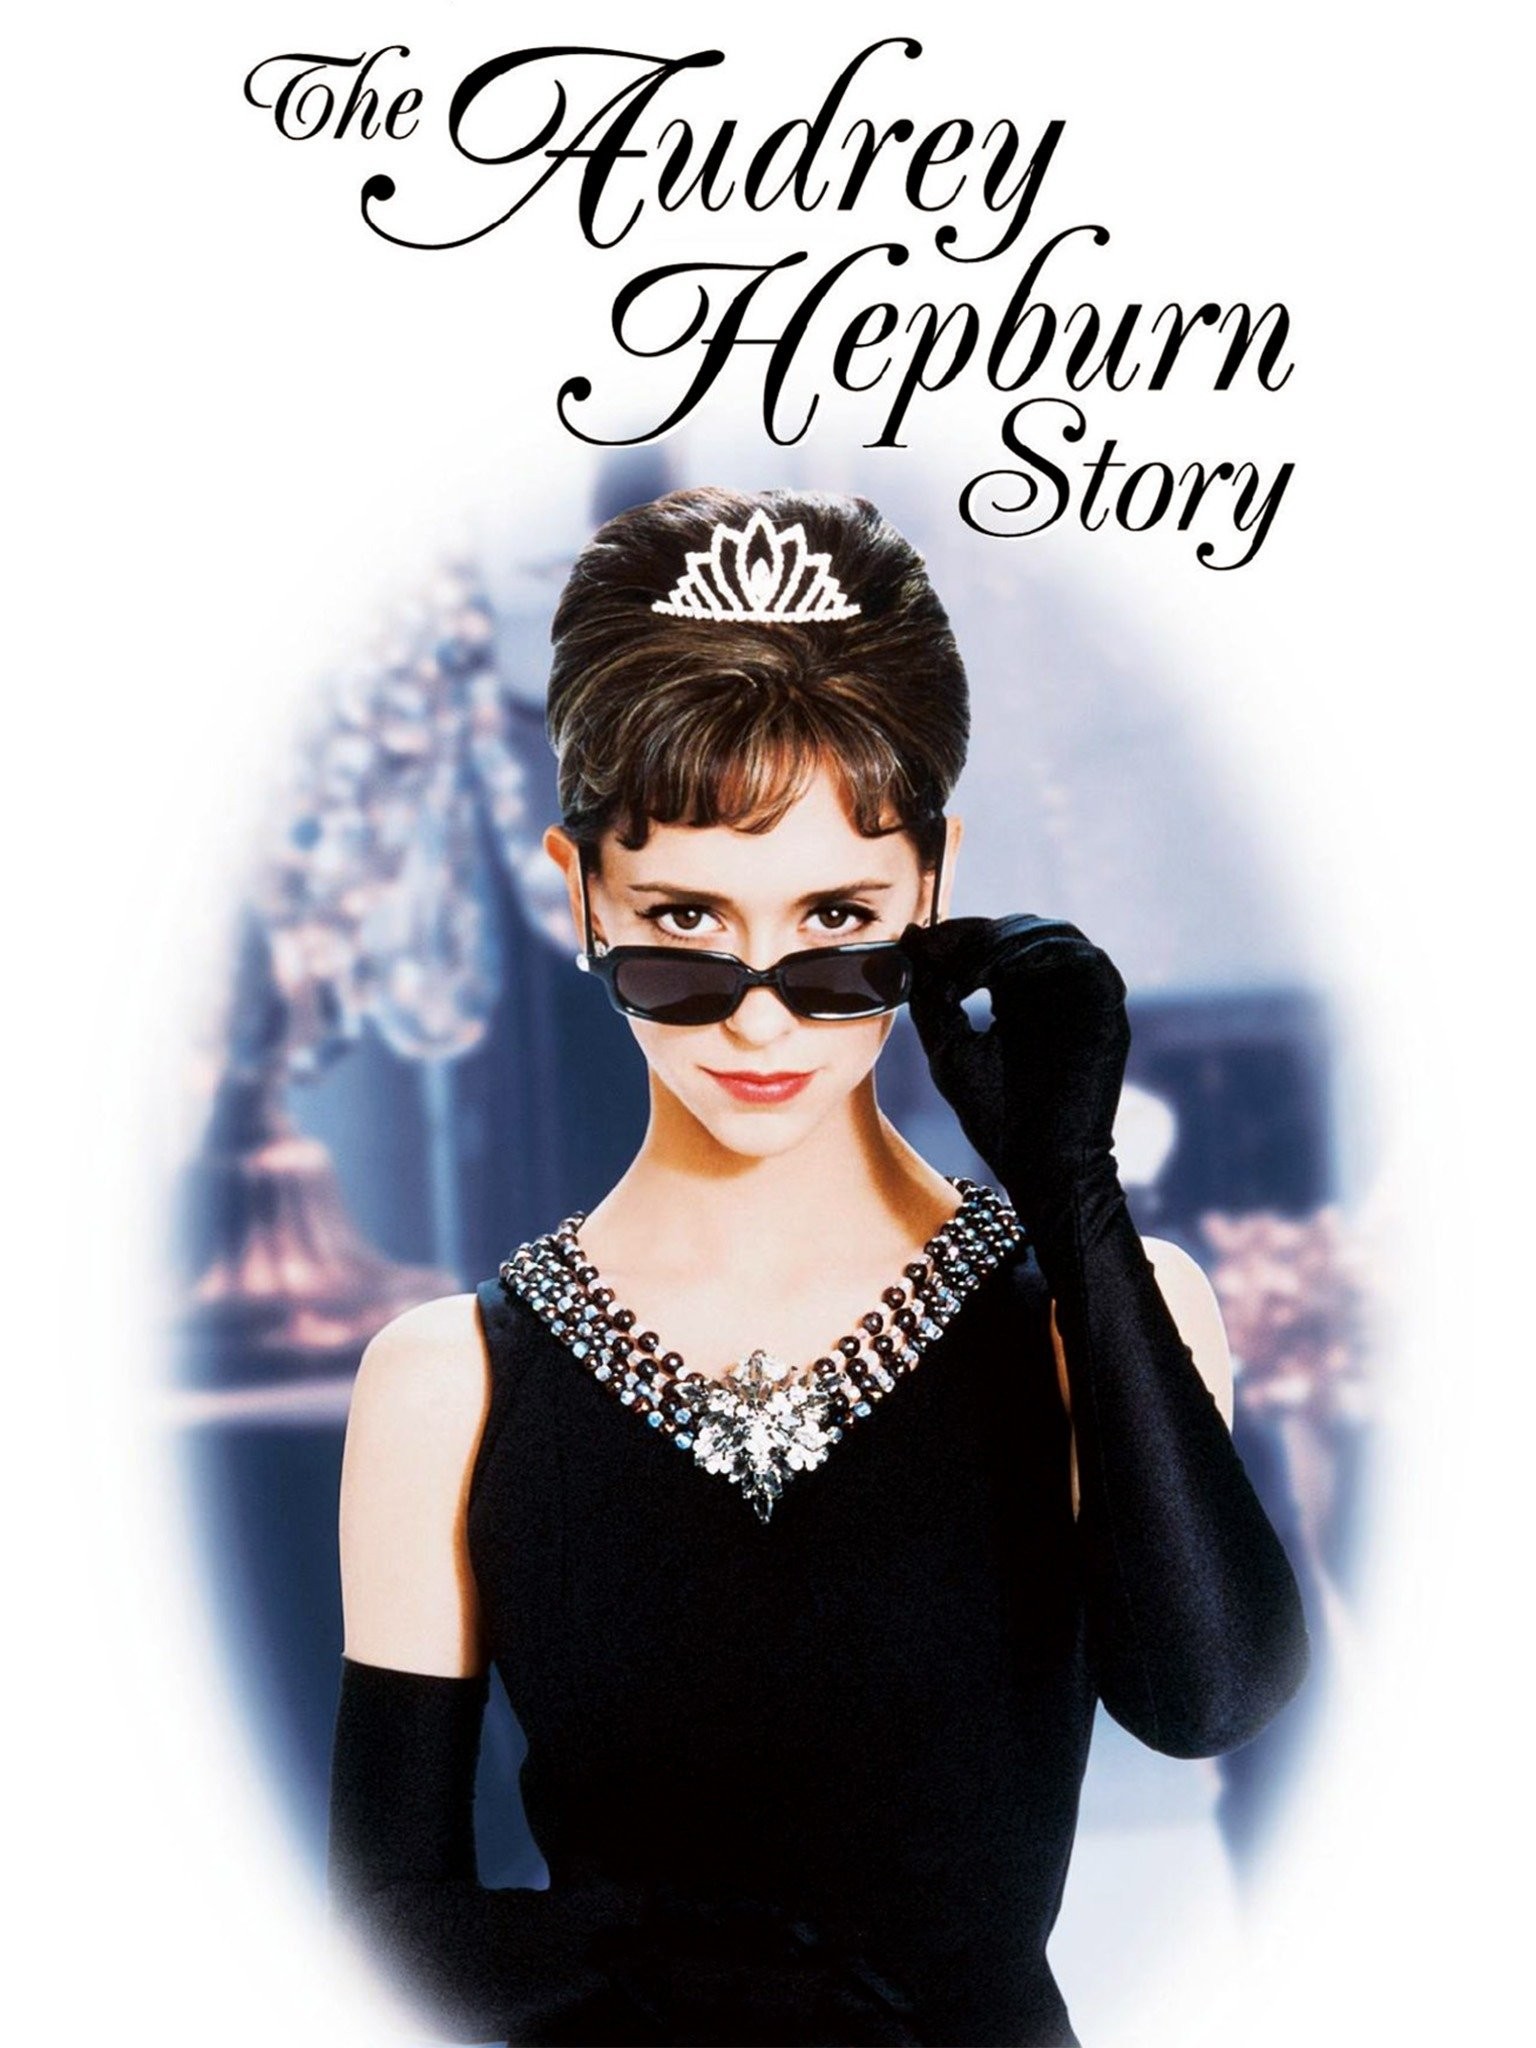 audrey hepburn biography official web